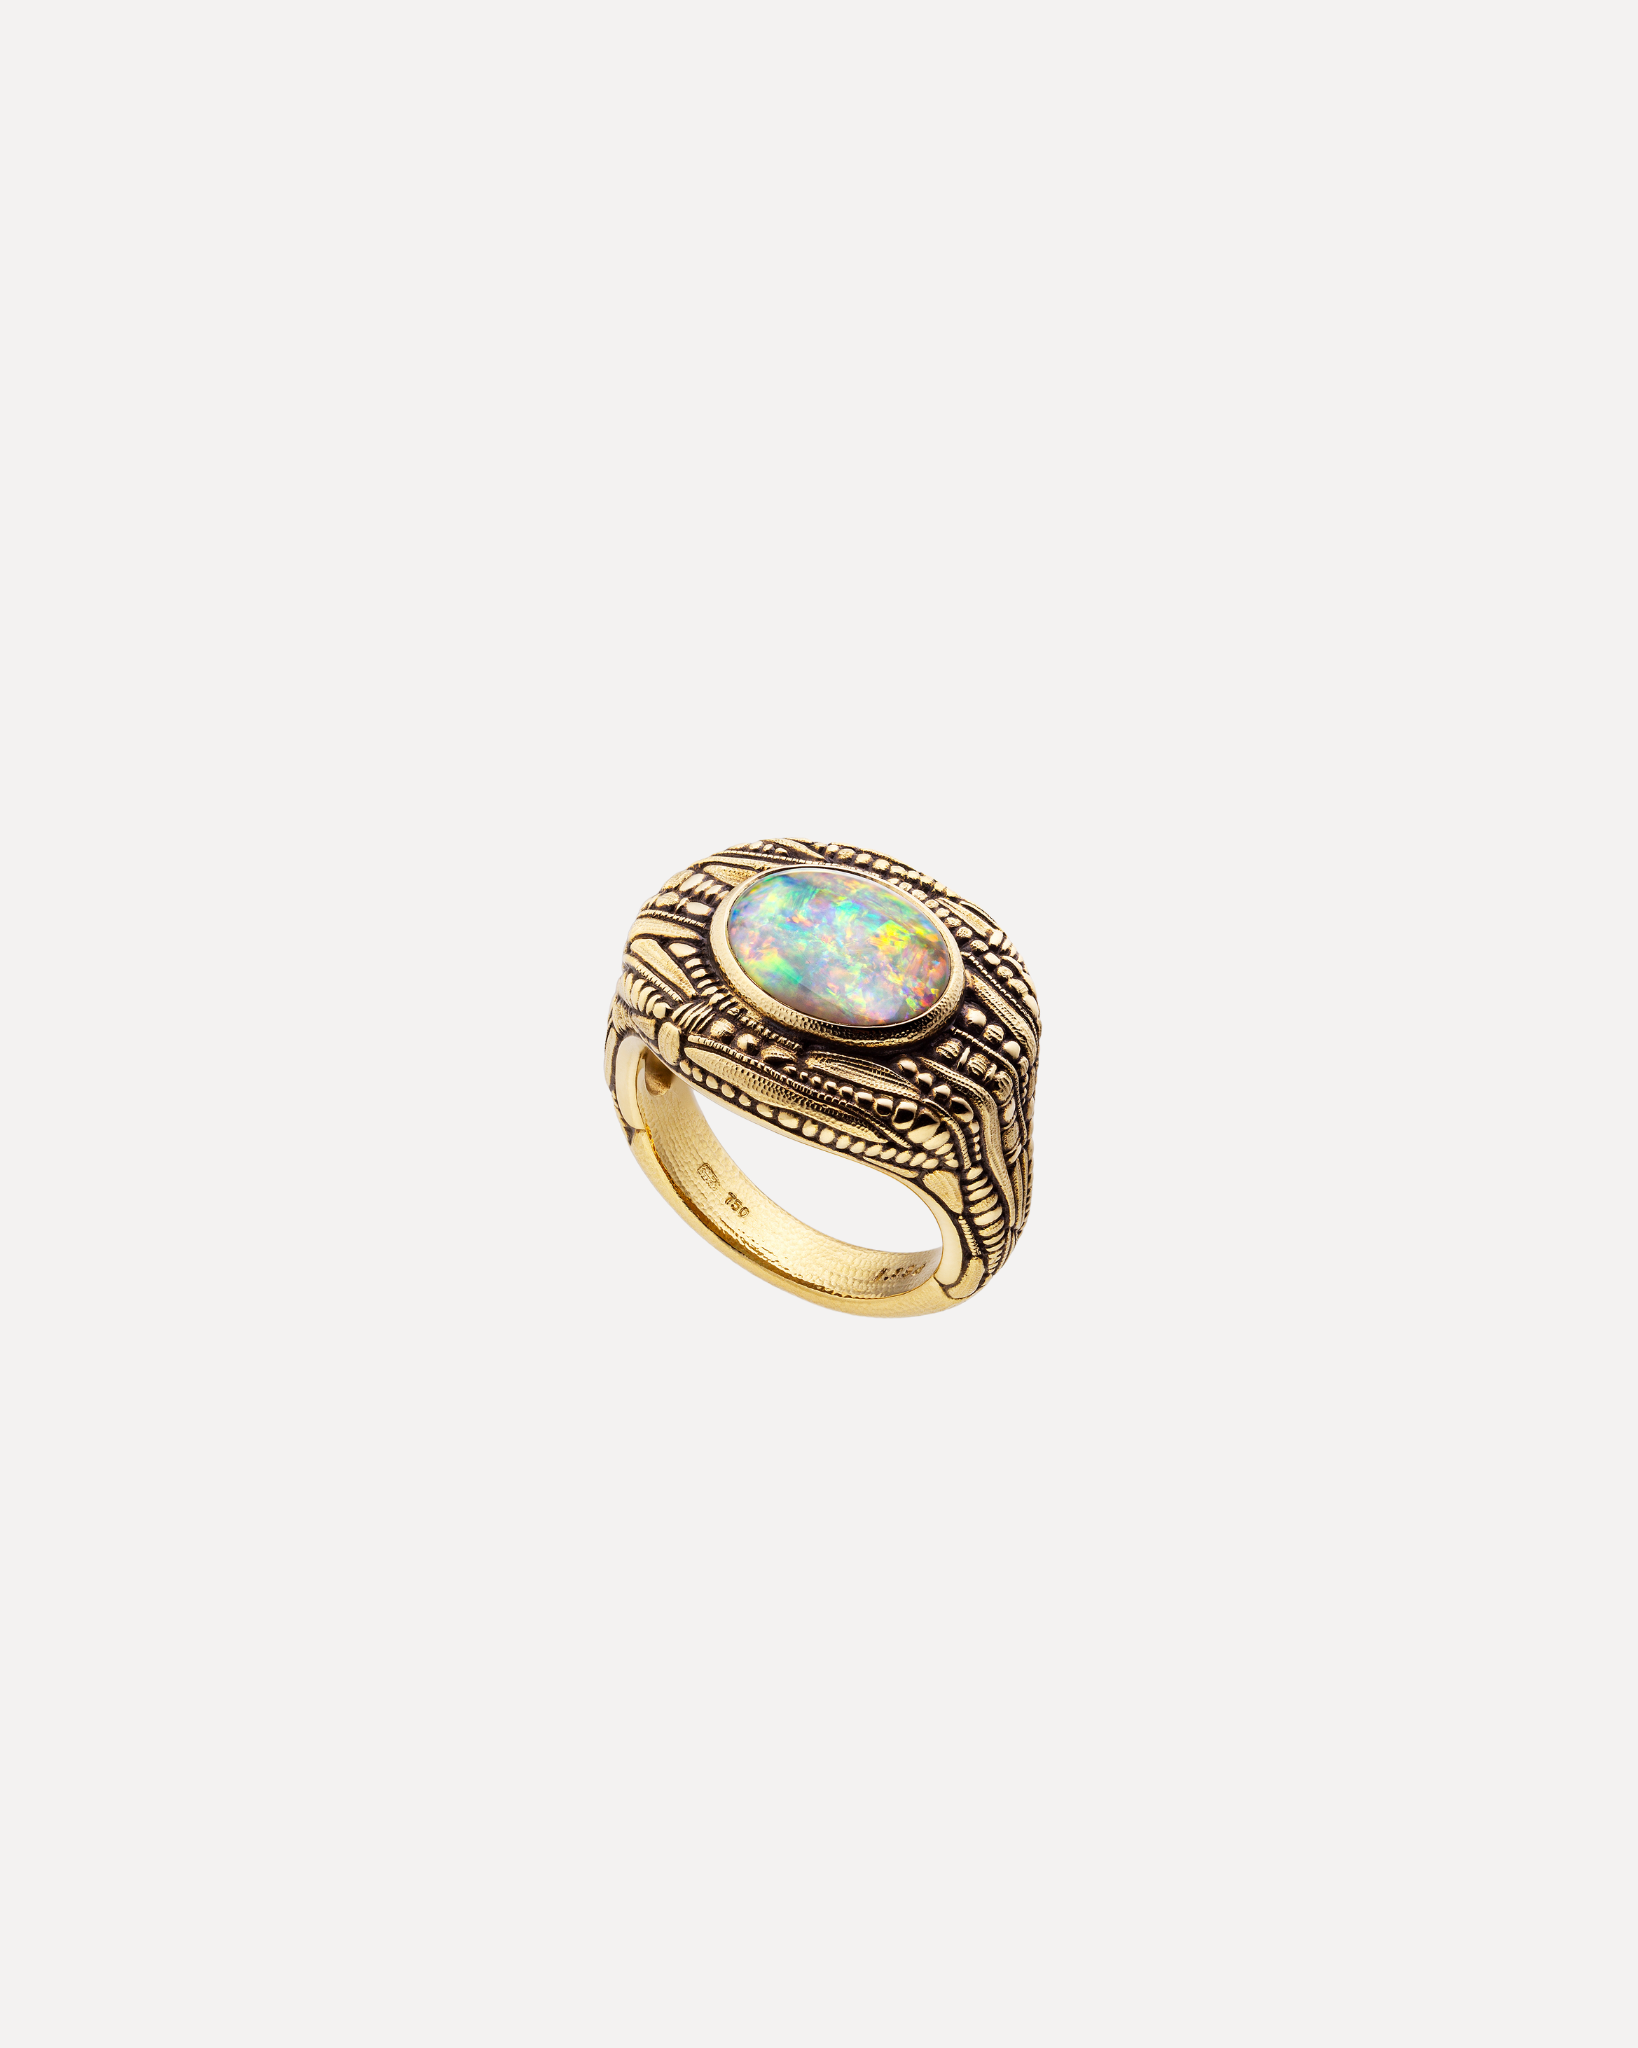 "Jane" Black Opal Ring